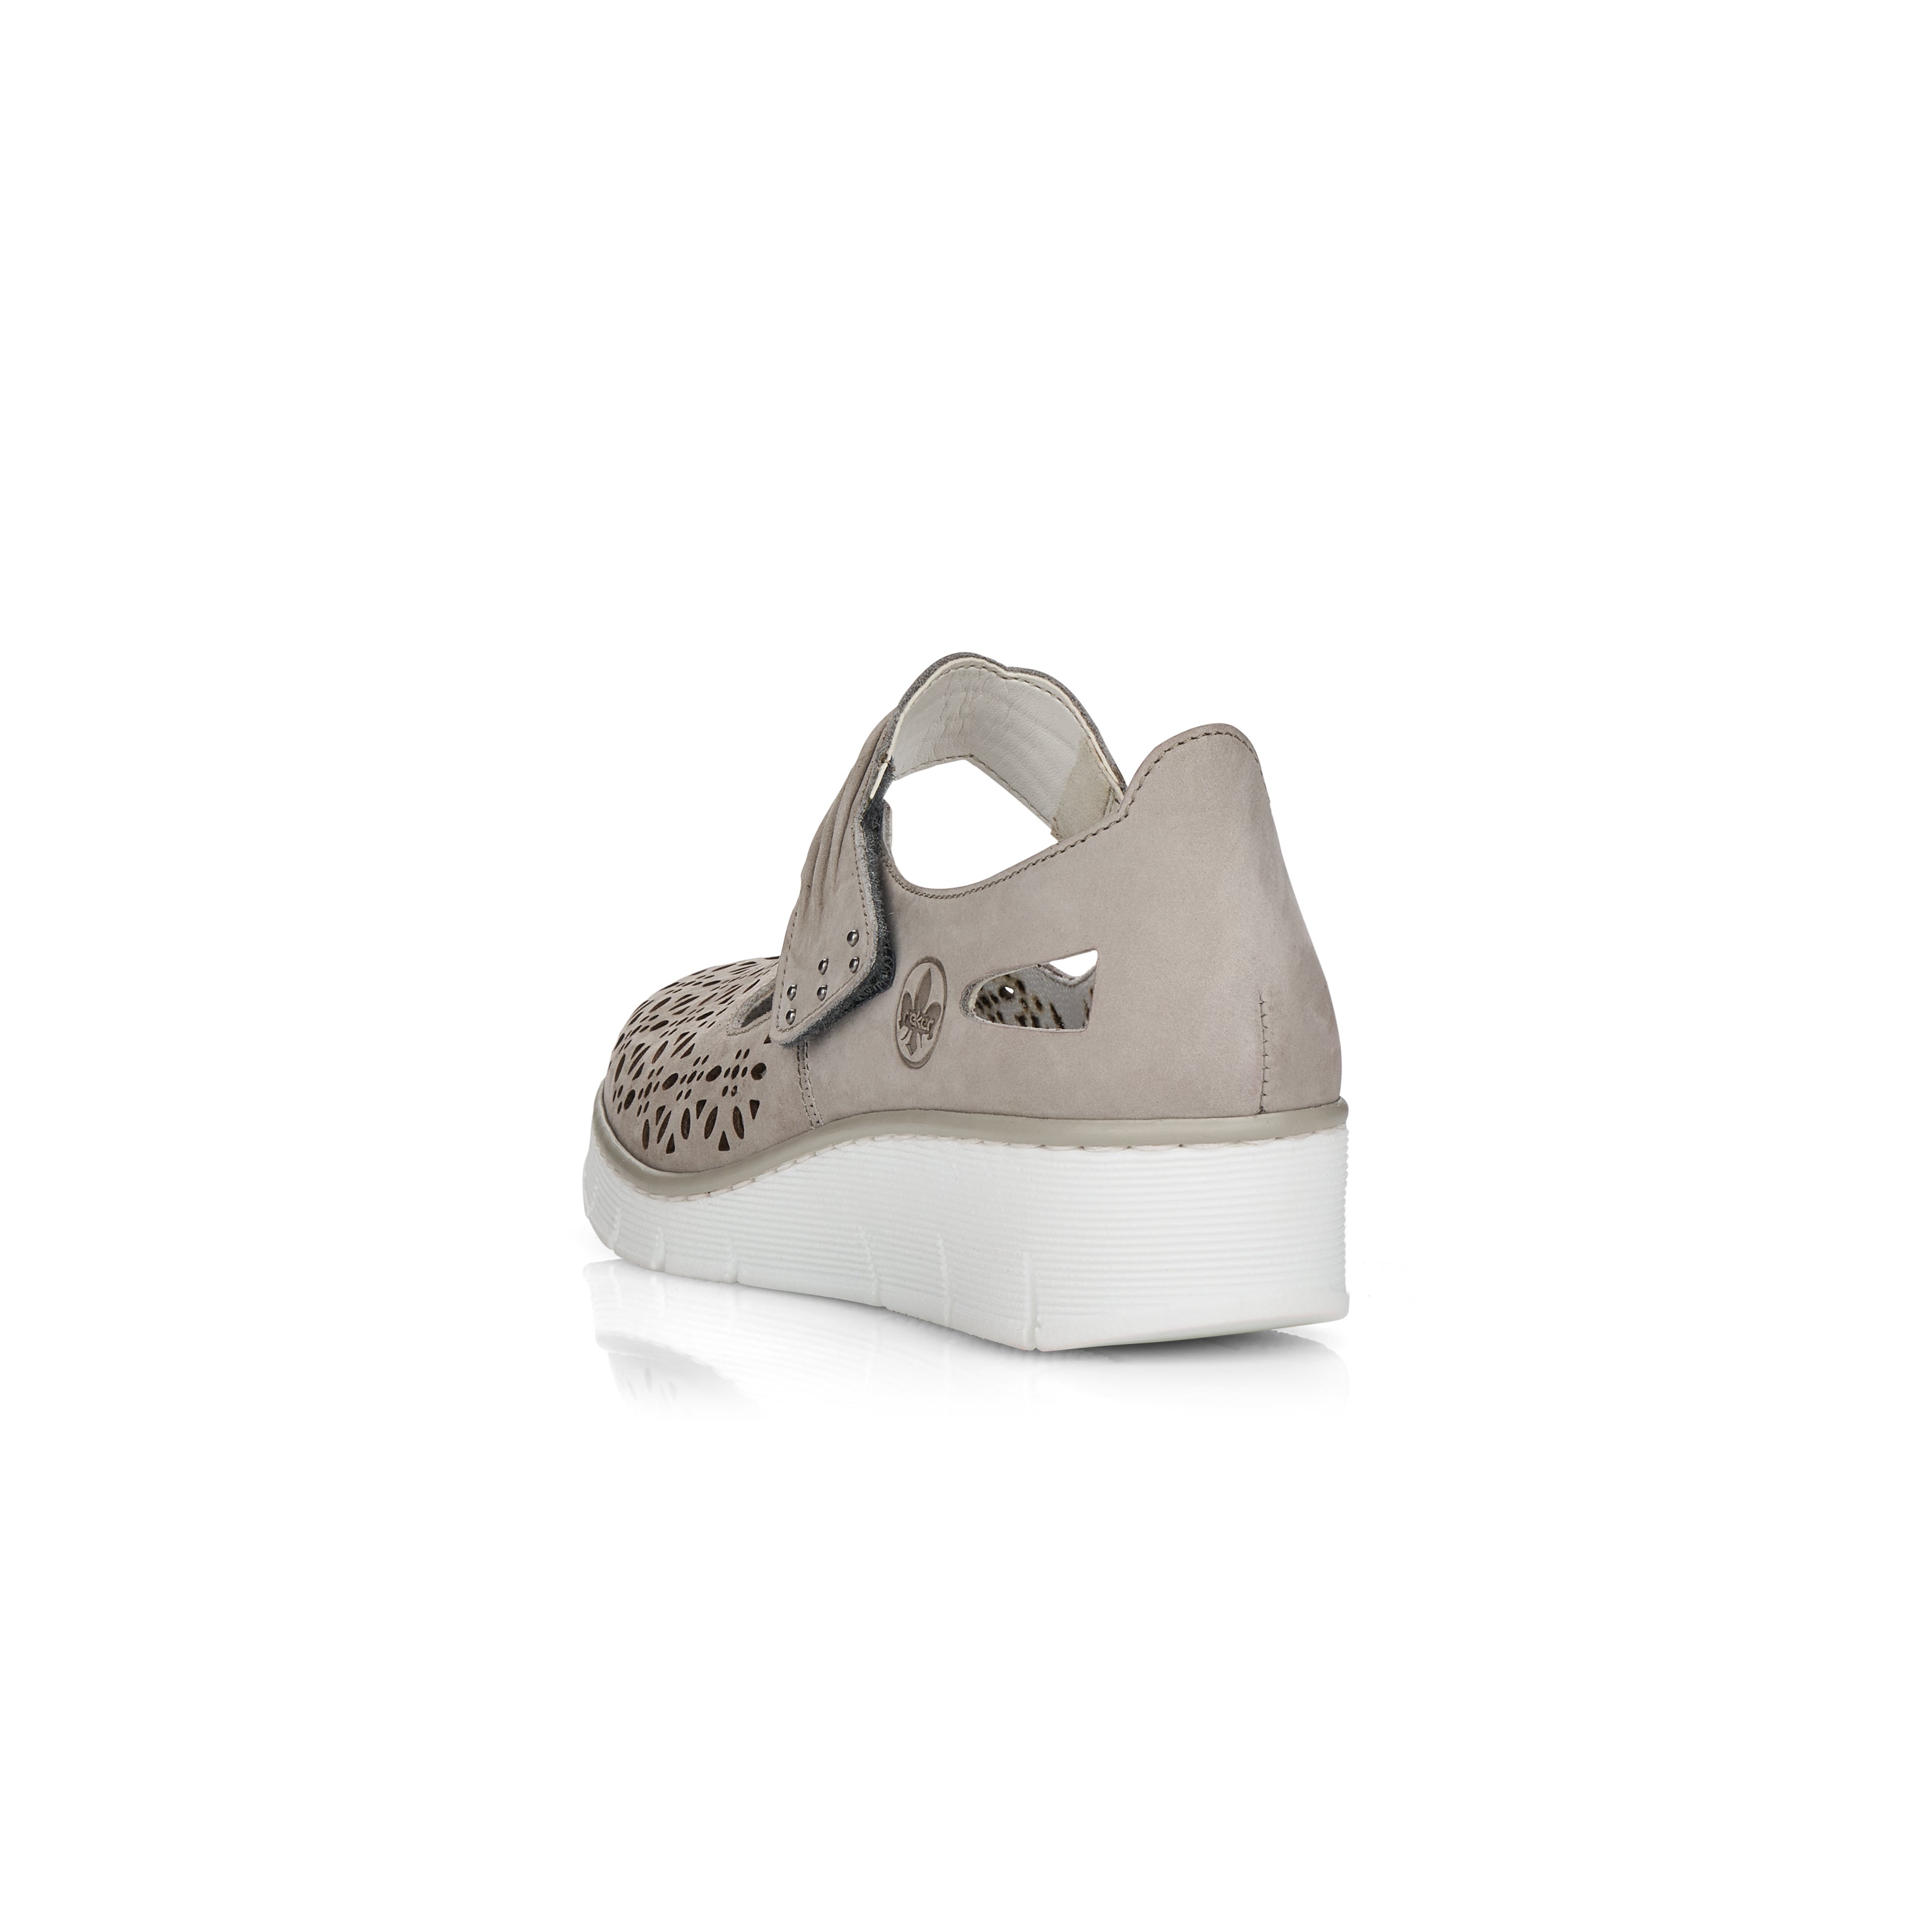 Rieker 537G7-40 Grey Wedge Shoes The Shoe Parlour